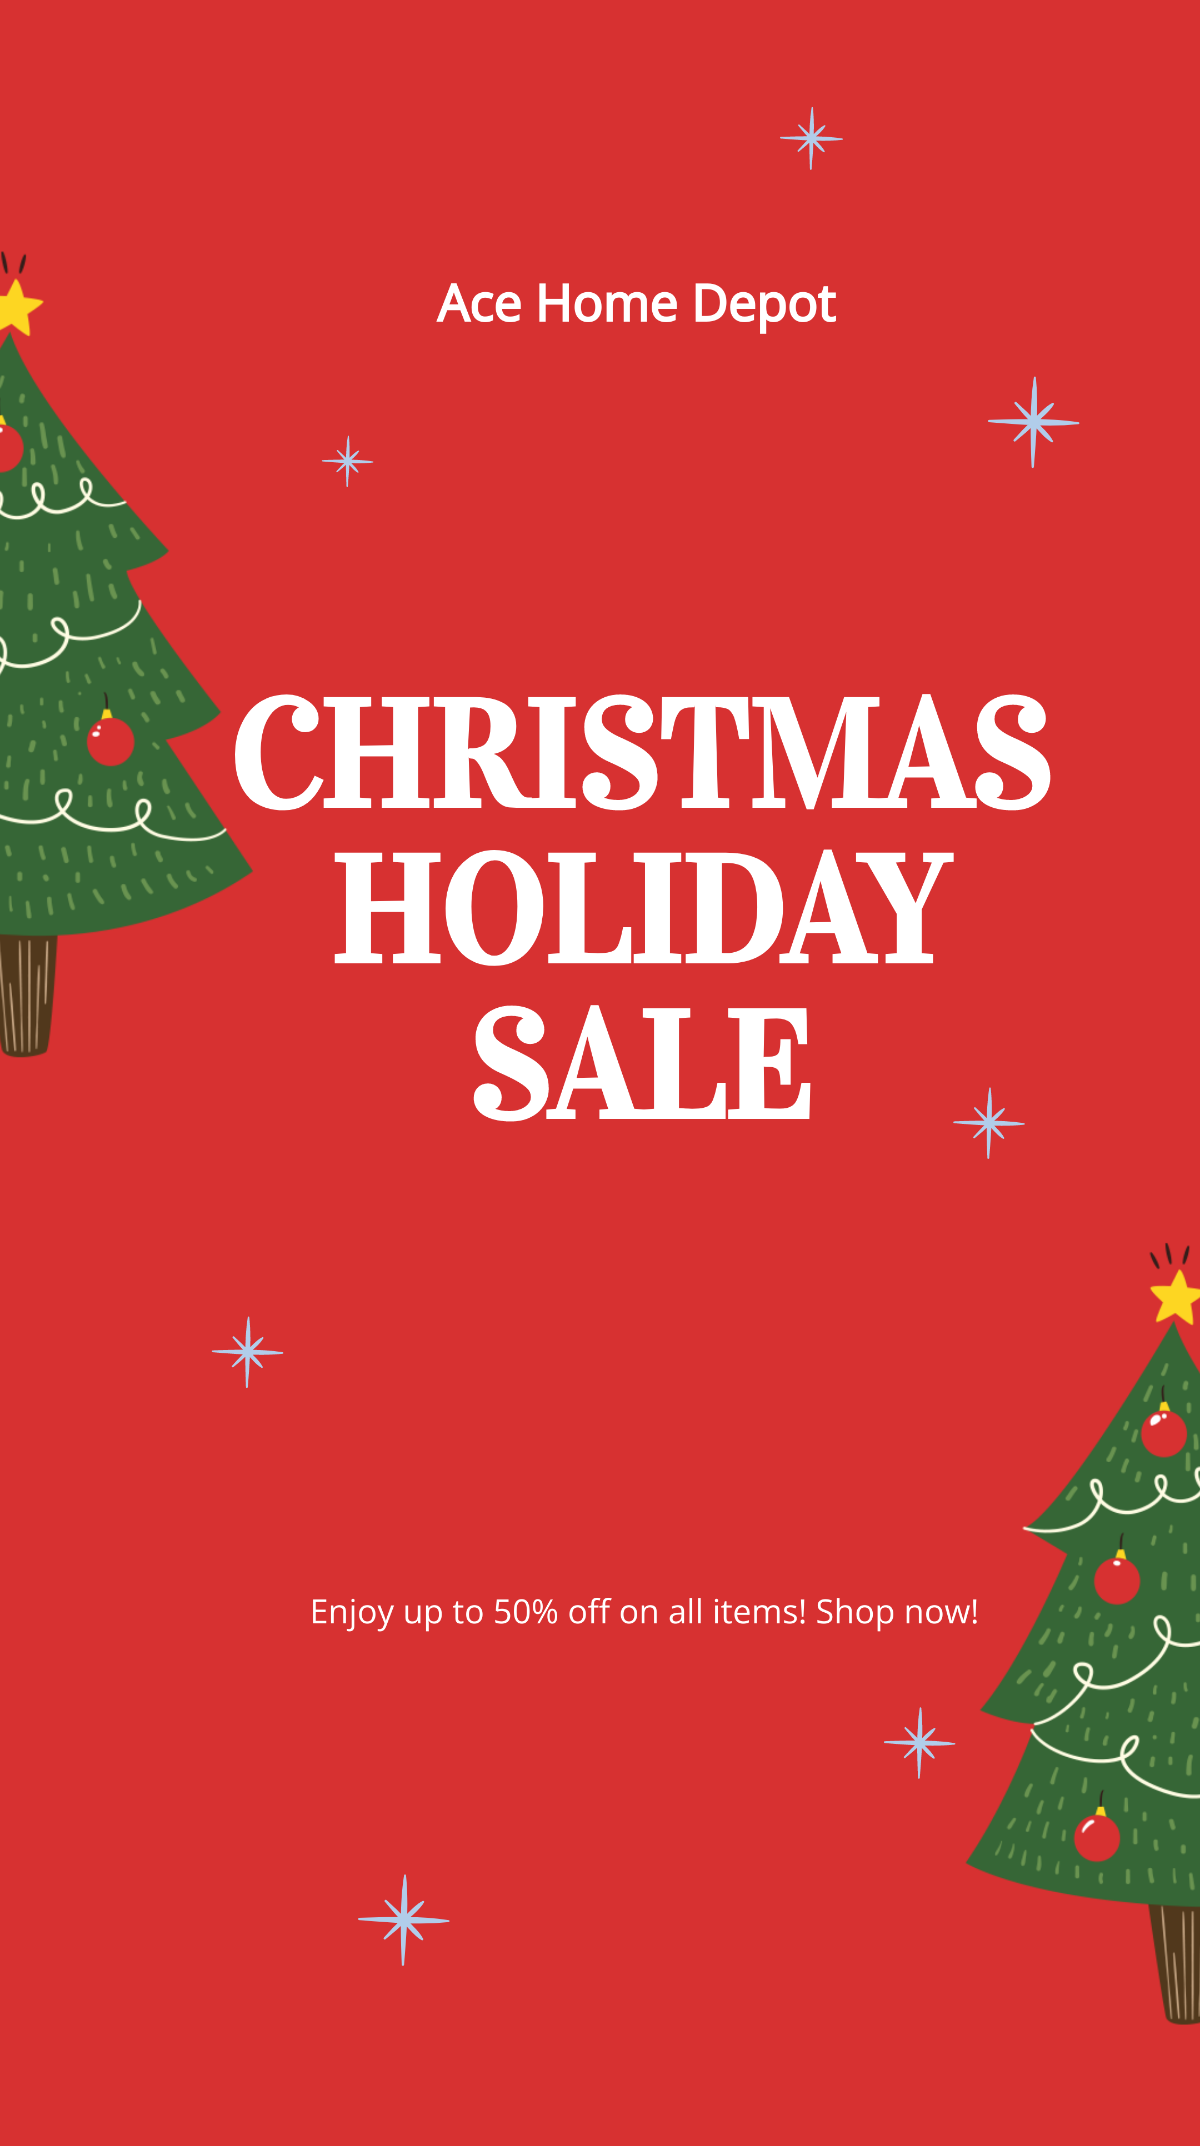 Christmas Holiday Sale Whatsapp Image Template